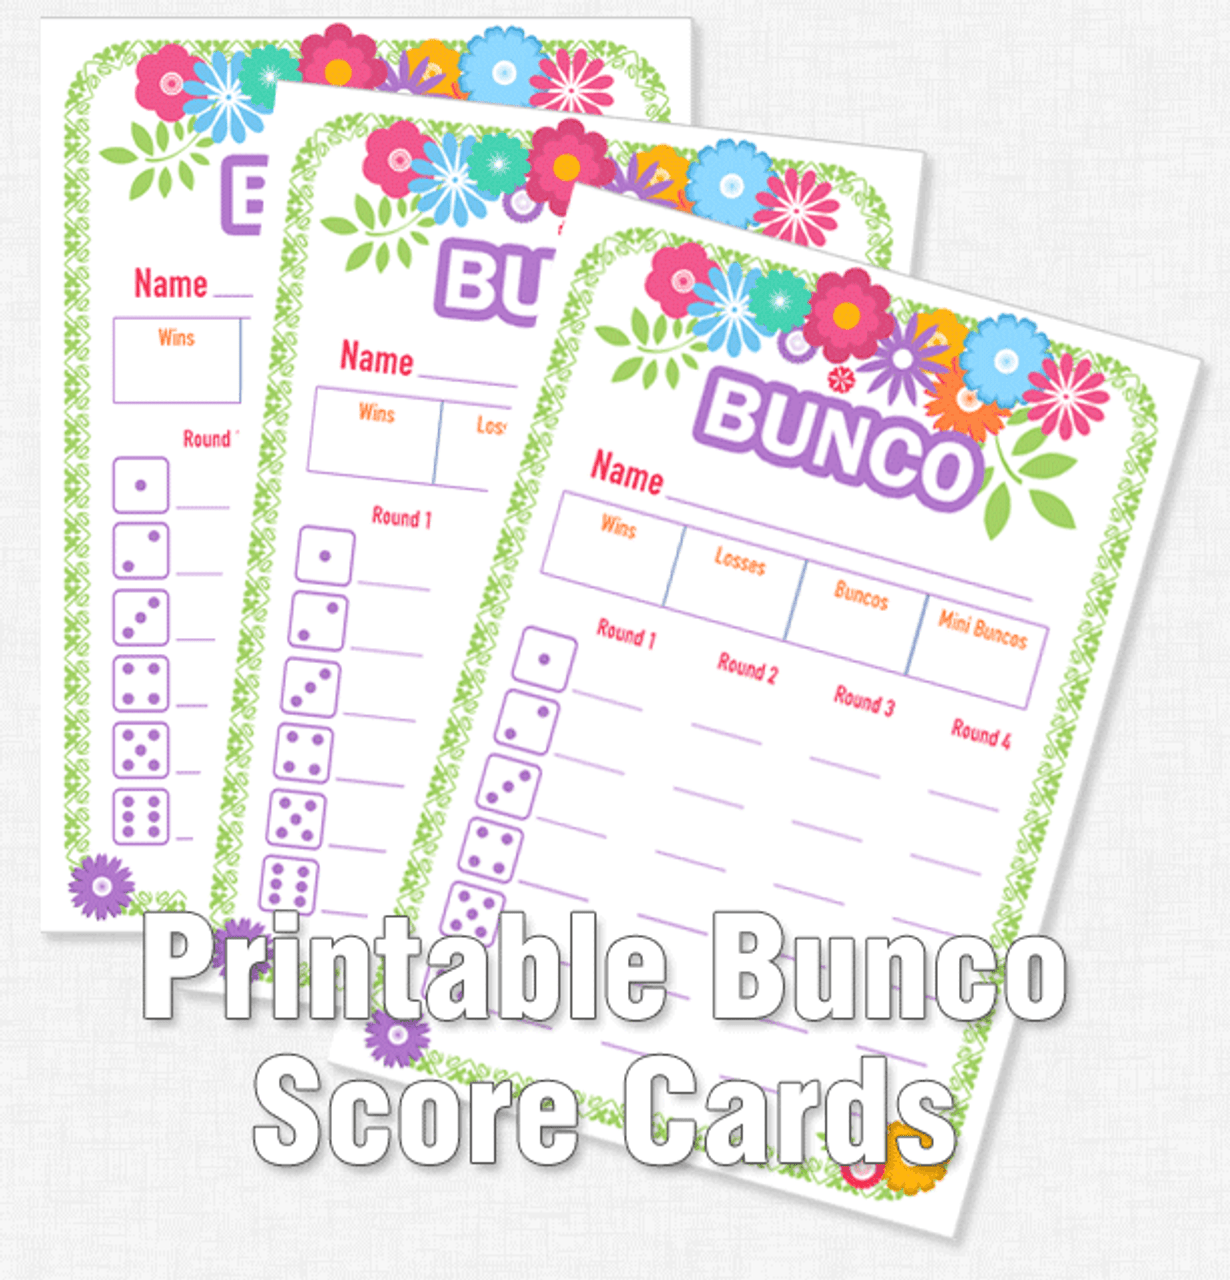 printable-flower-bunco-score-cards-dice-game-depot